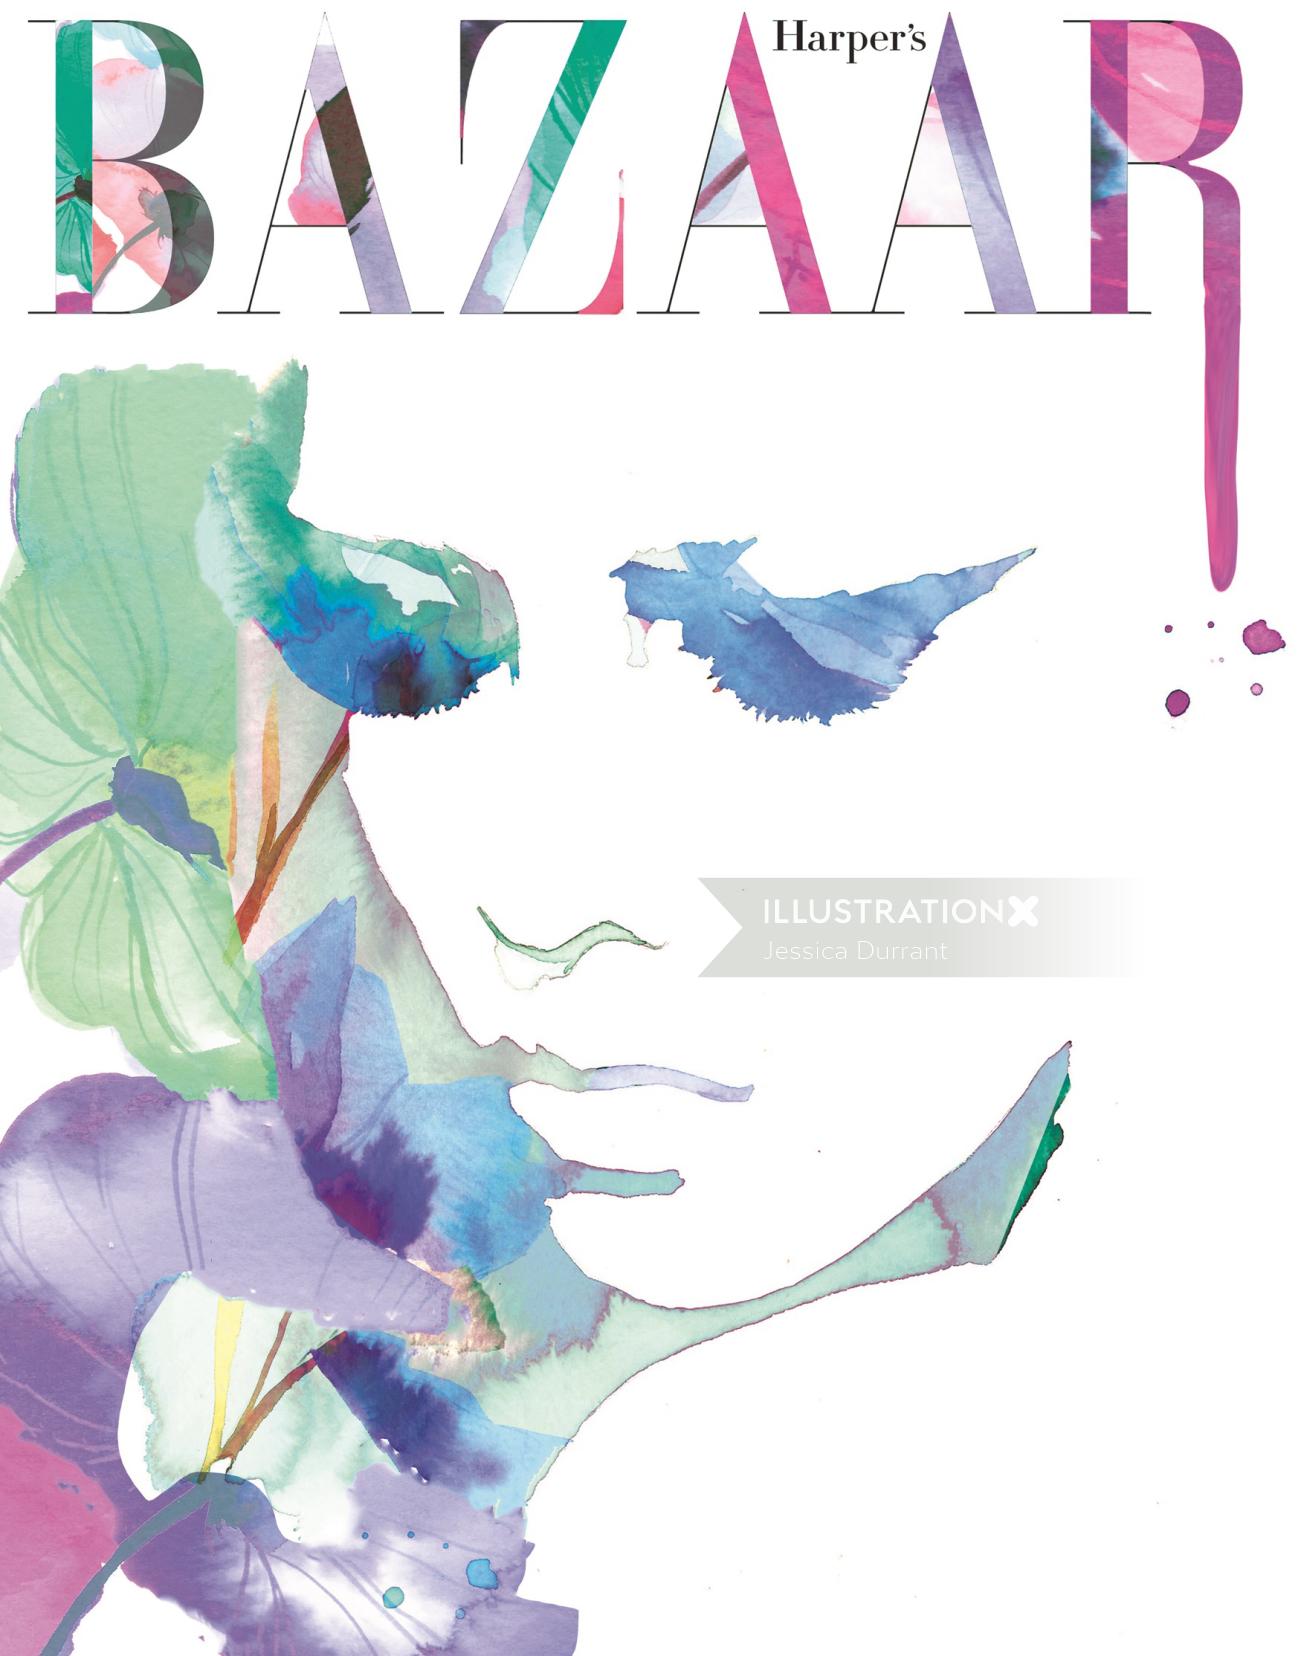 Editorial Harper's Bazaar Korea Cover